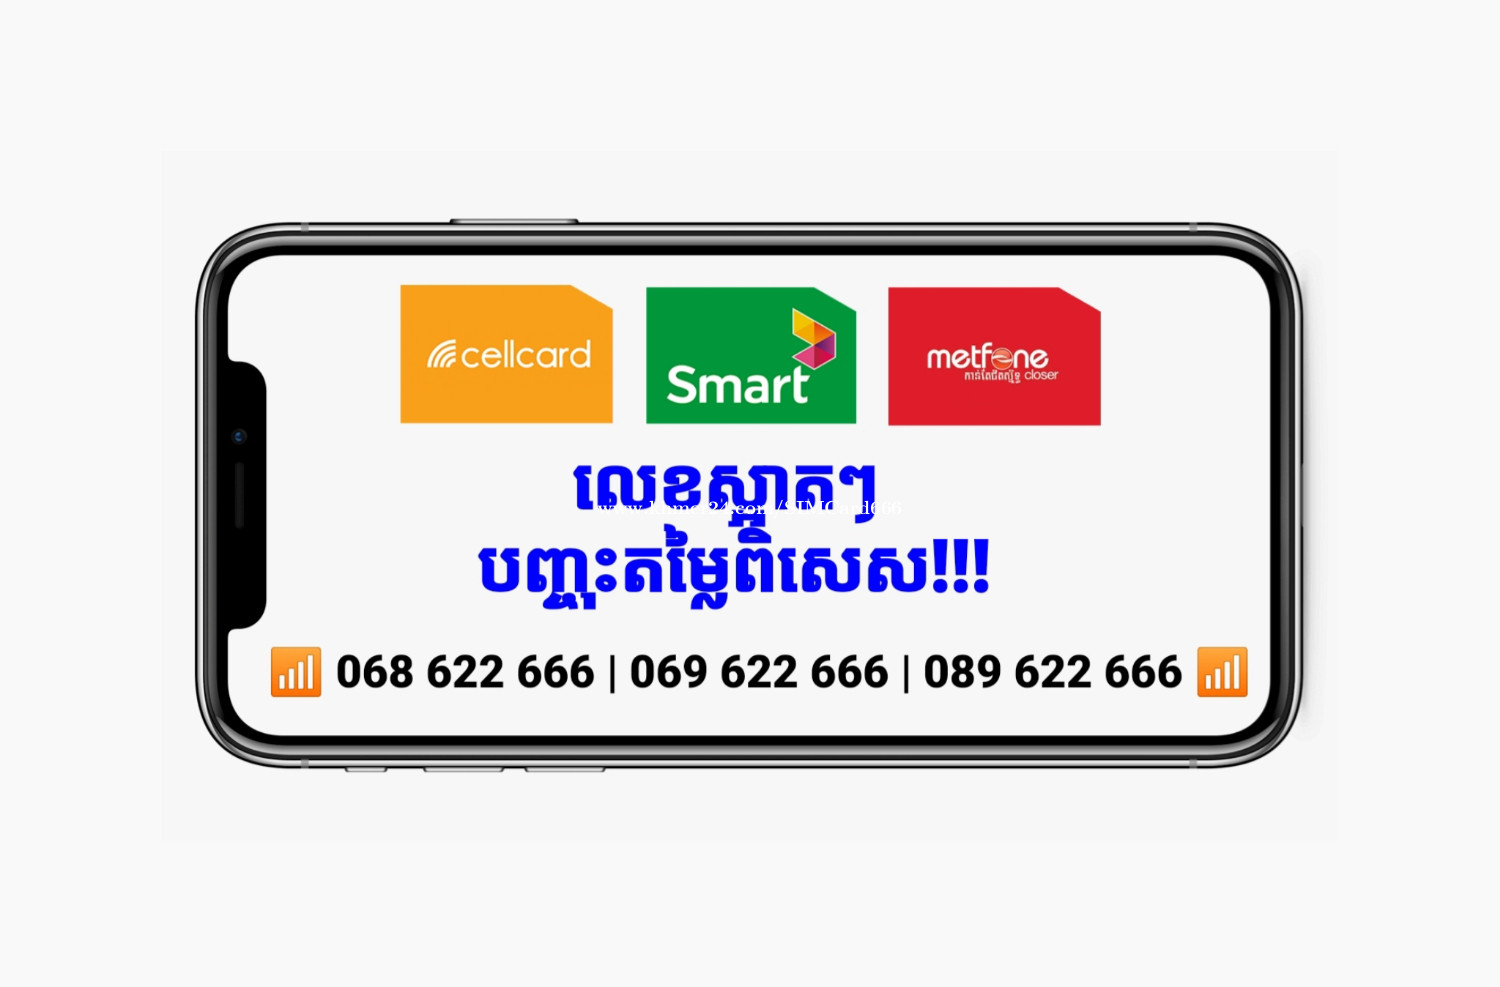 Cellcard និង Smart  លេខស្អាតៗ បញ្ចុះតម្លៃពិសេស!!!